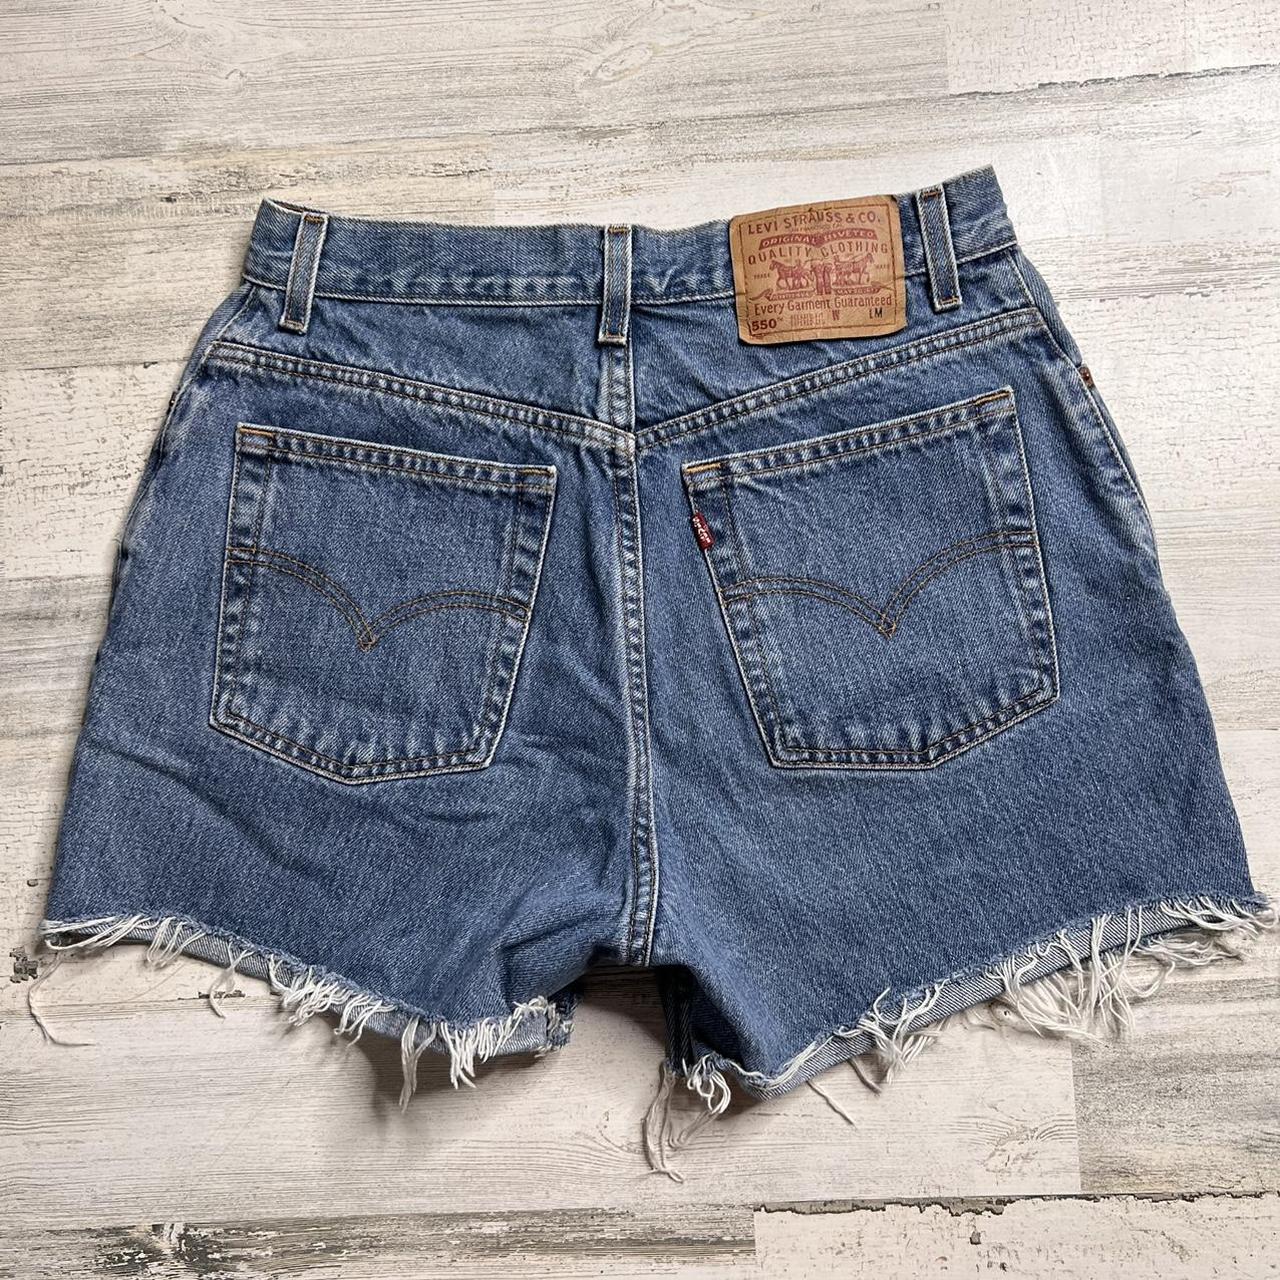 Vintage 550 Levi’s Cutoff Shorts. Tag reads “12... - Depop